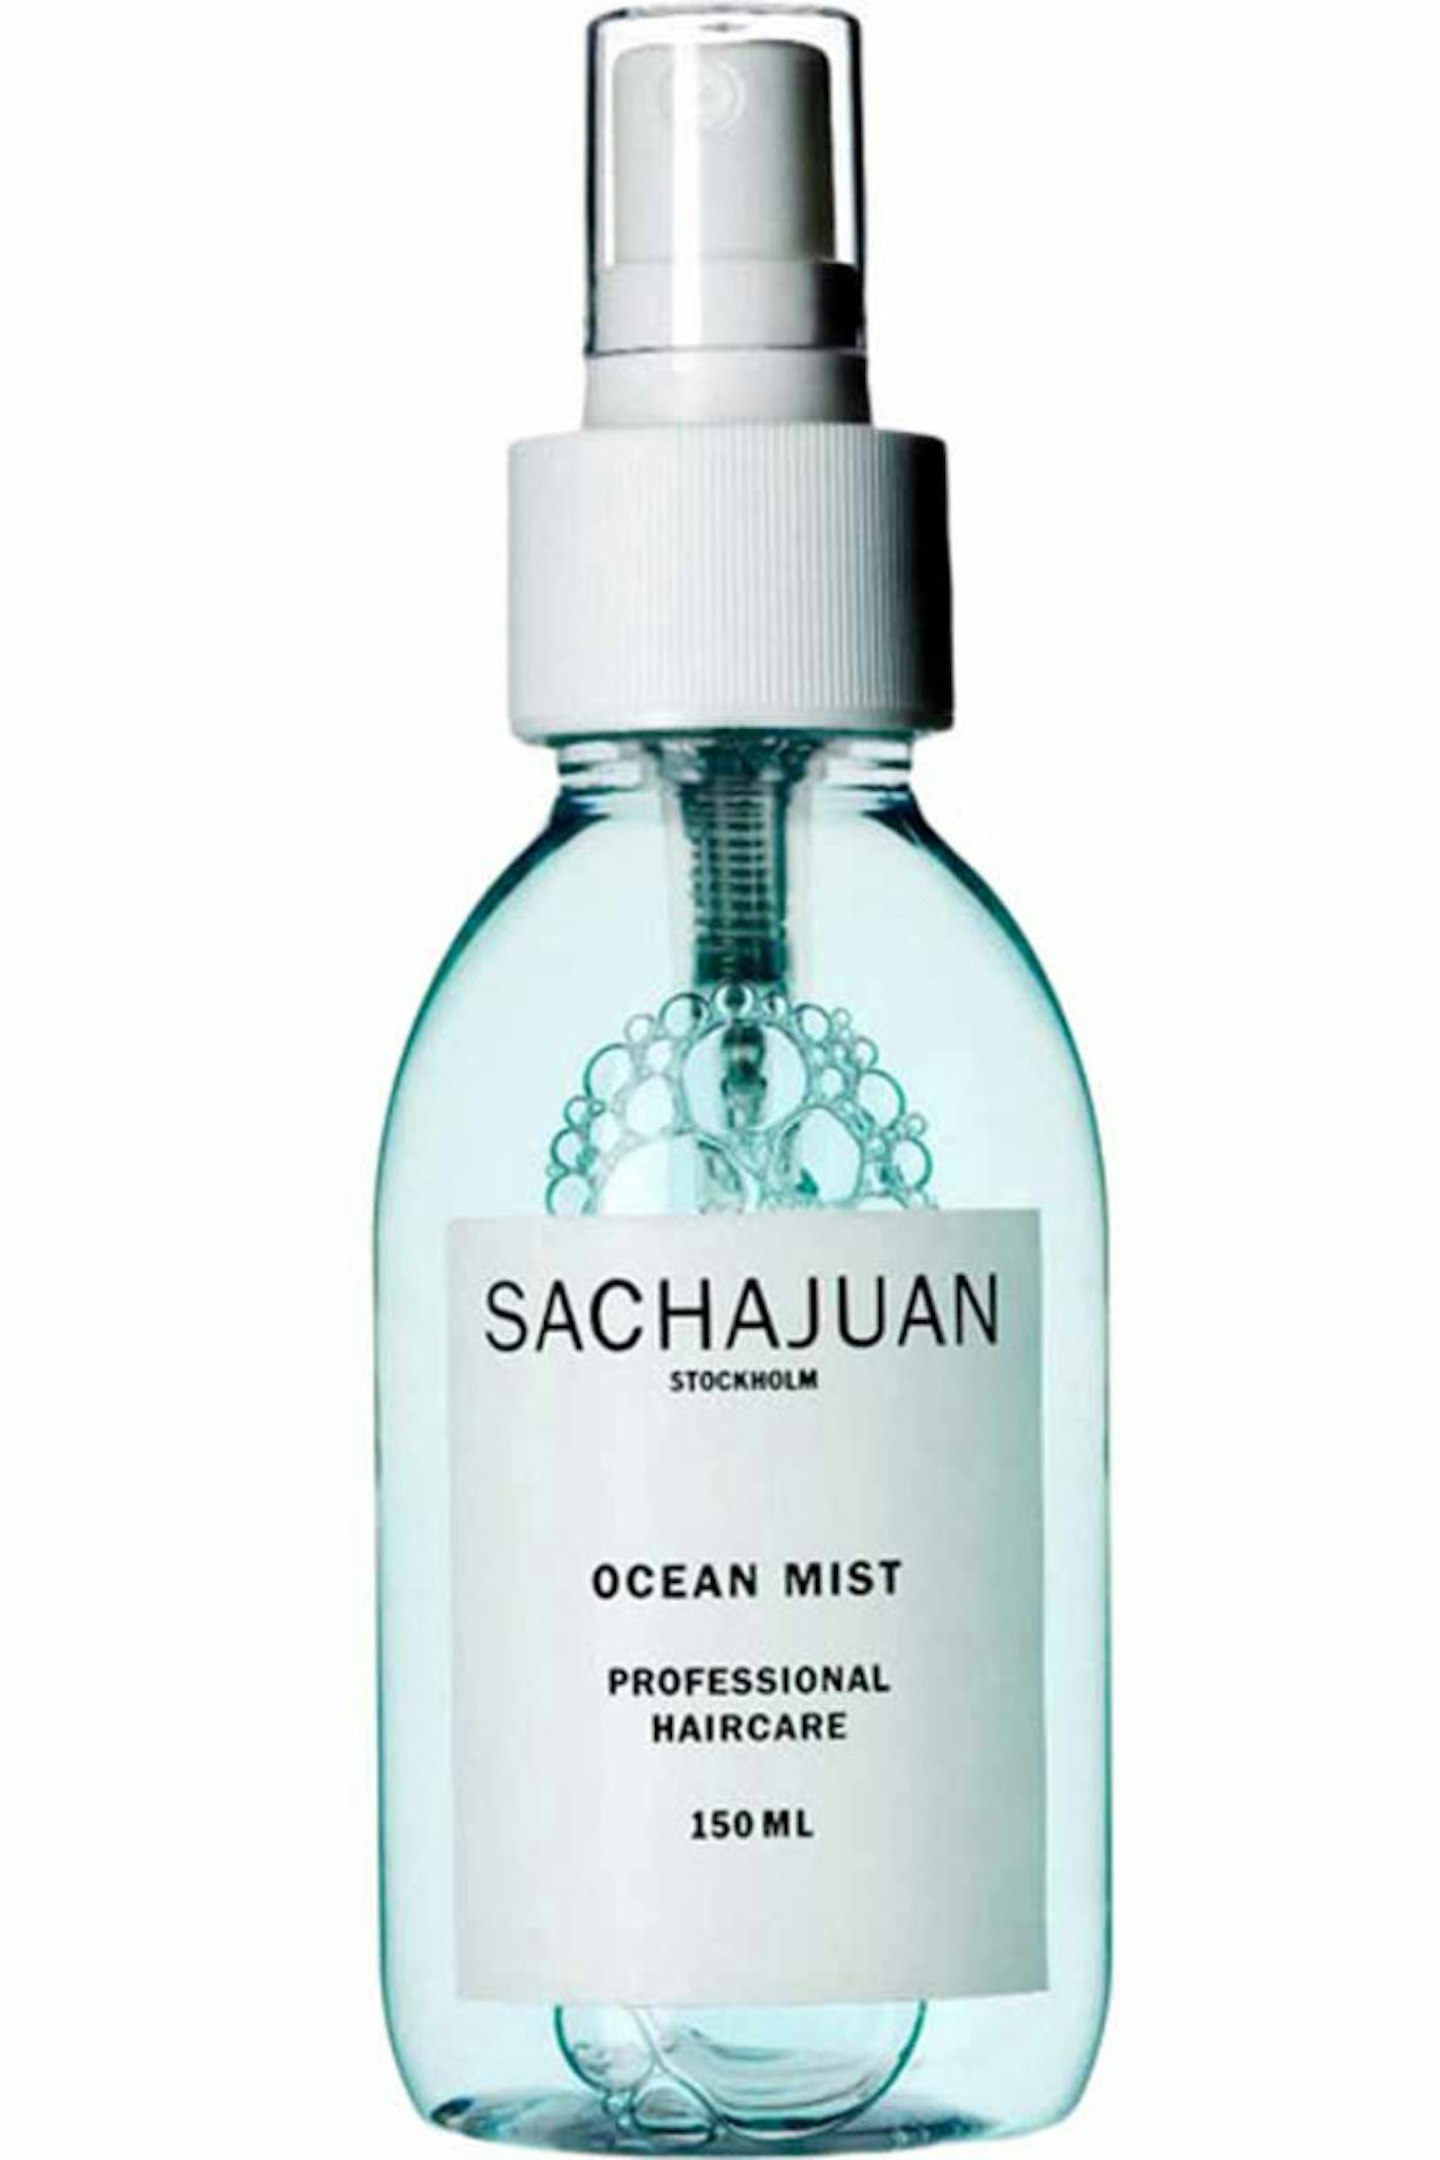 1. Sachajuan Ocean Mist, £18